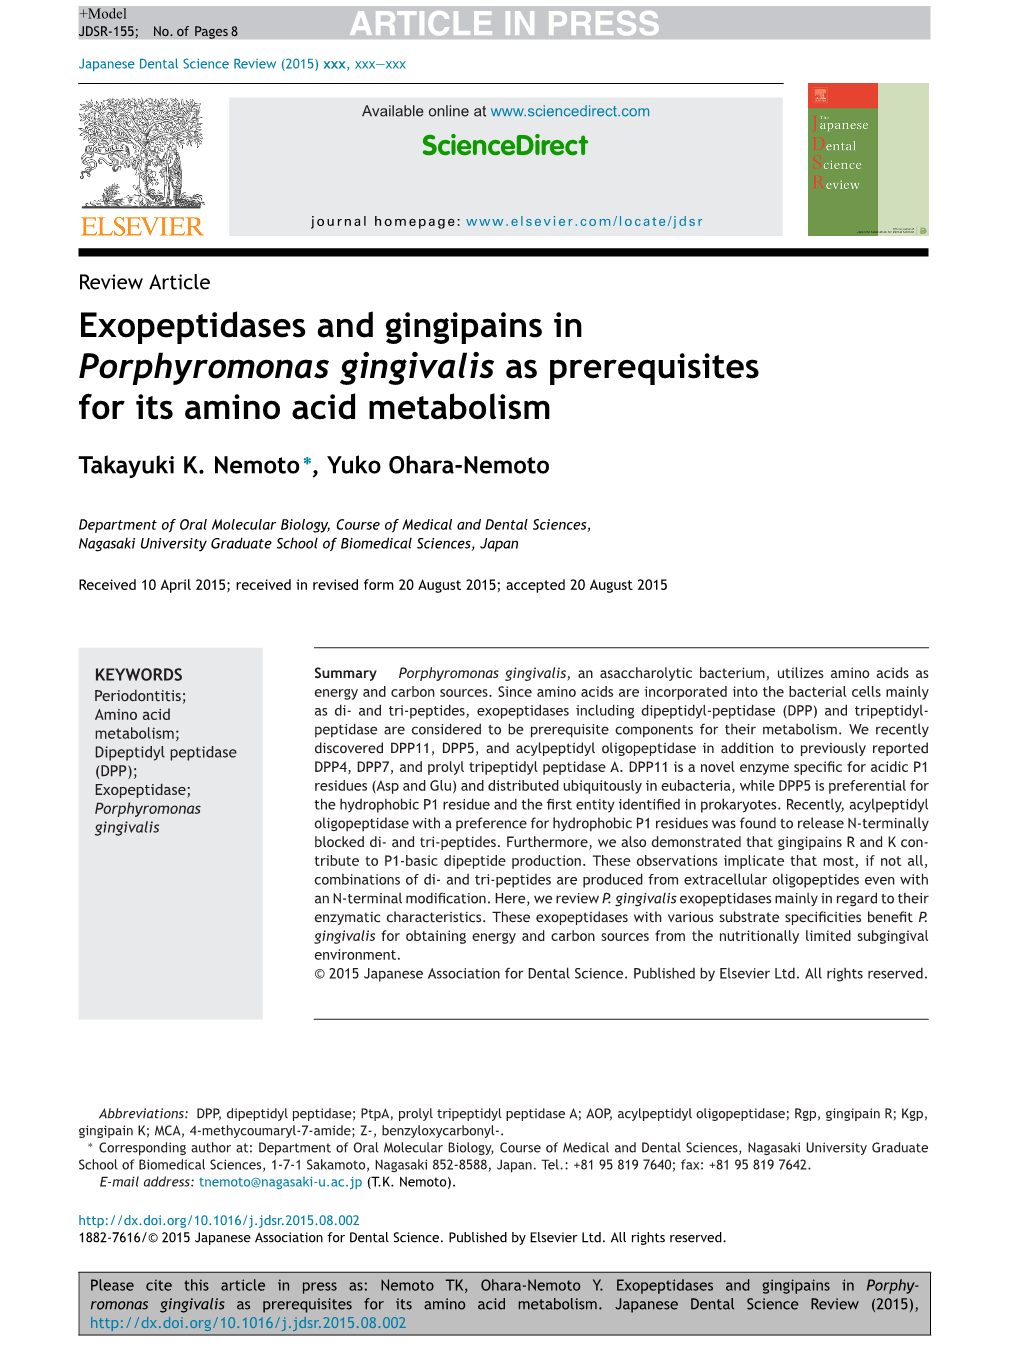 Exopeptidases and Gingipains in Porphyromonas Gingivalis As